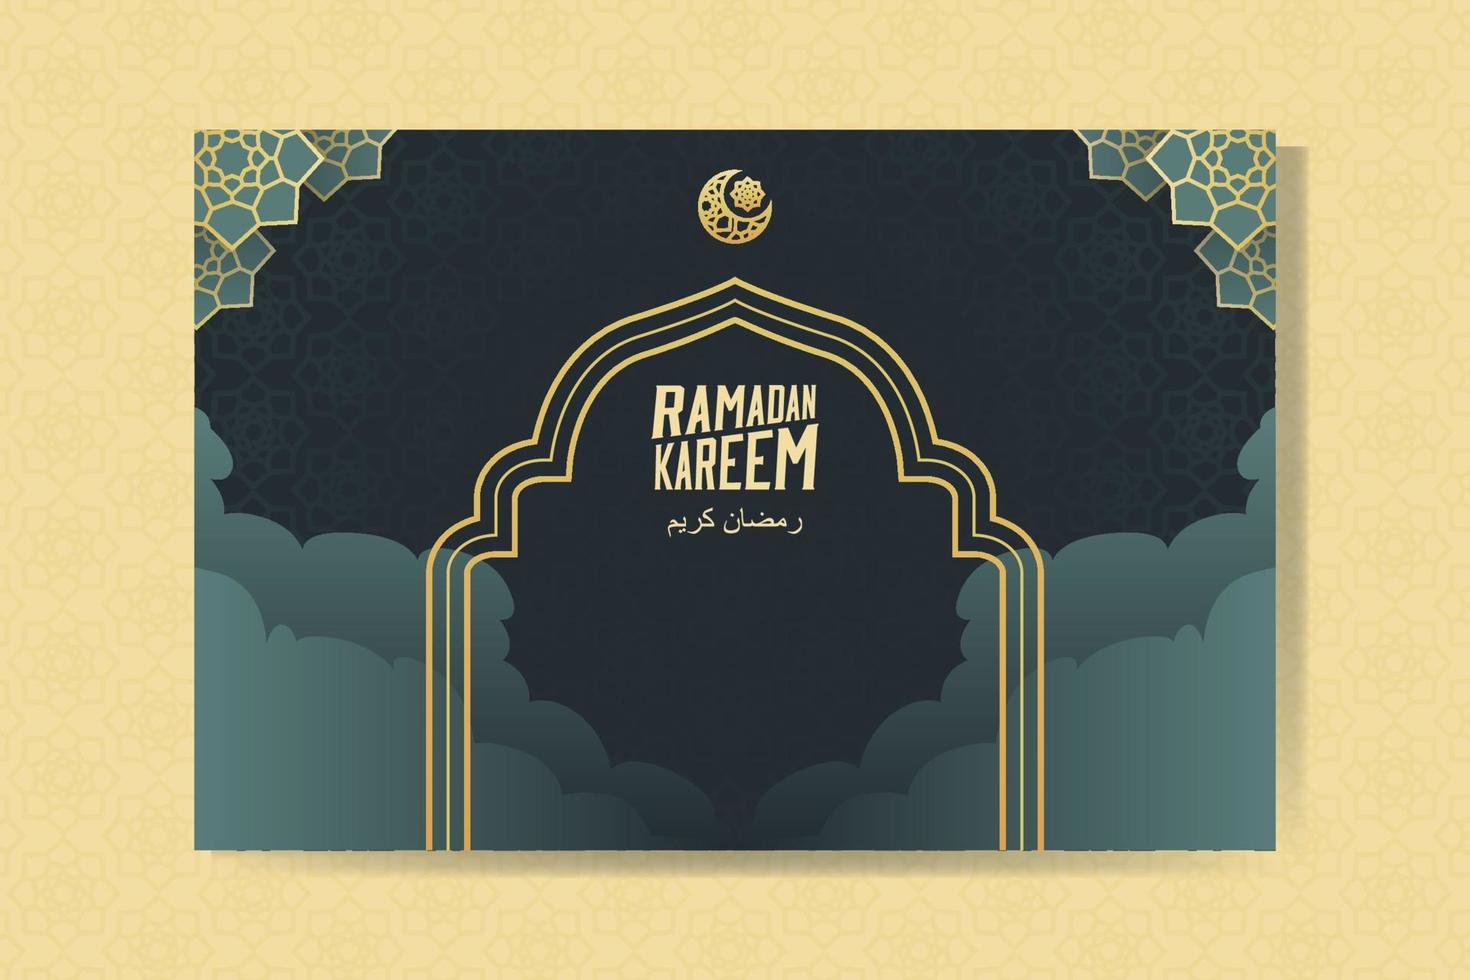 Ramadan kareem groet kaart met lantaarns, maan en wolk. Ramadan mubarak. achtergrond vector illustratie.